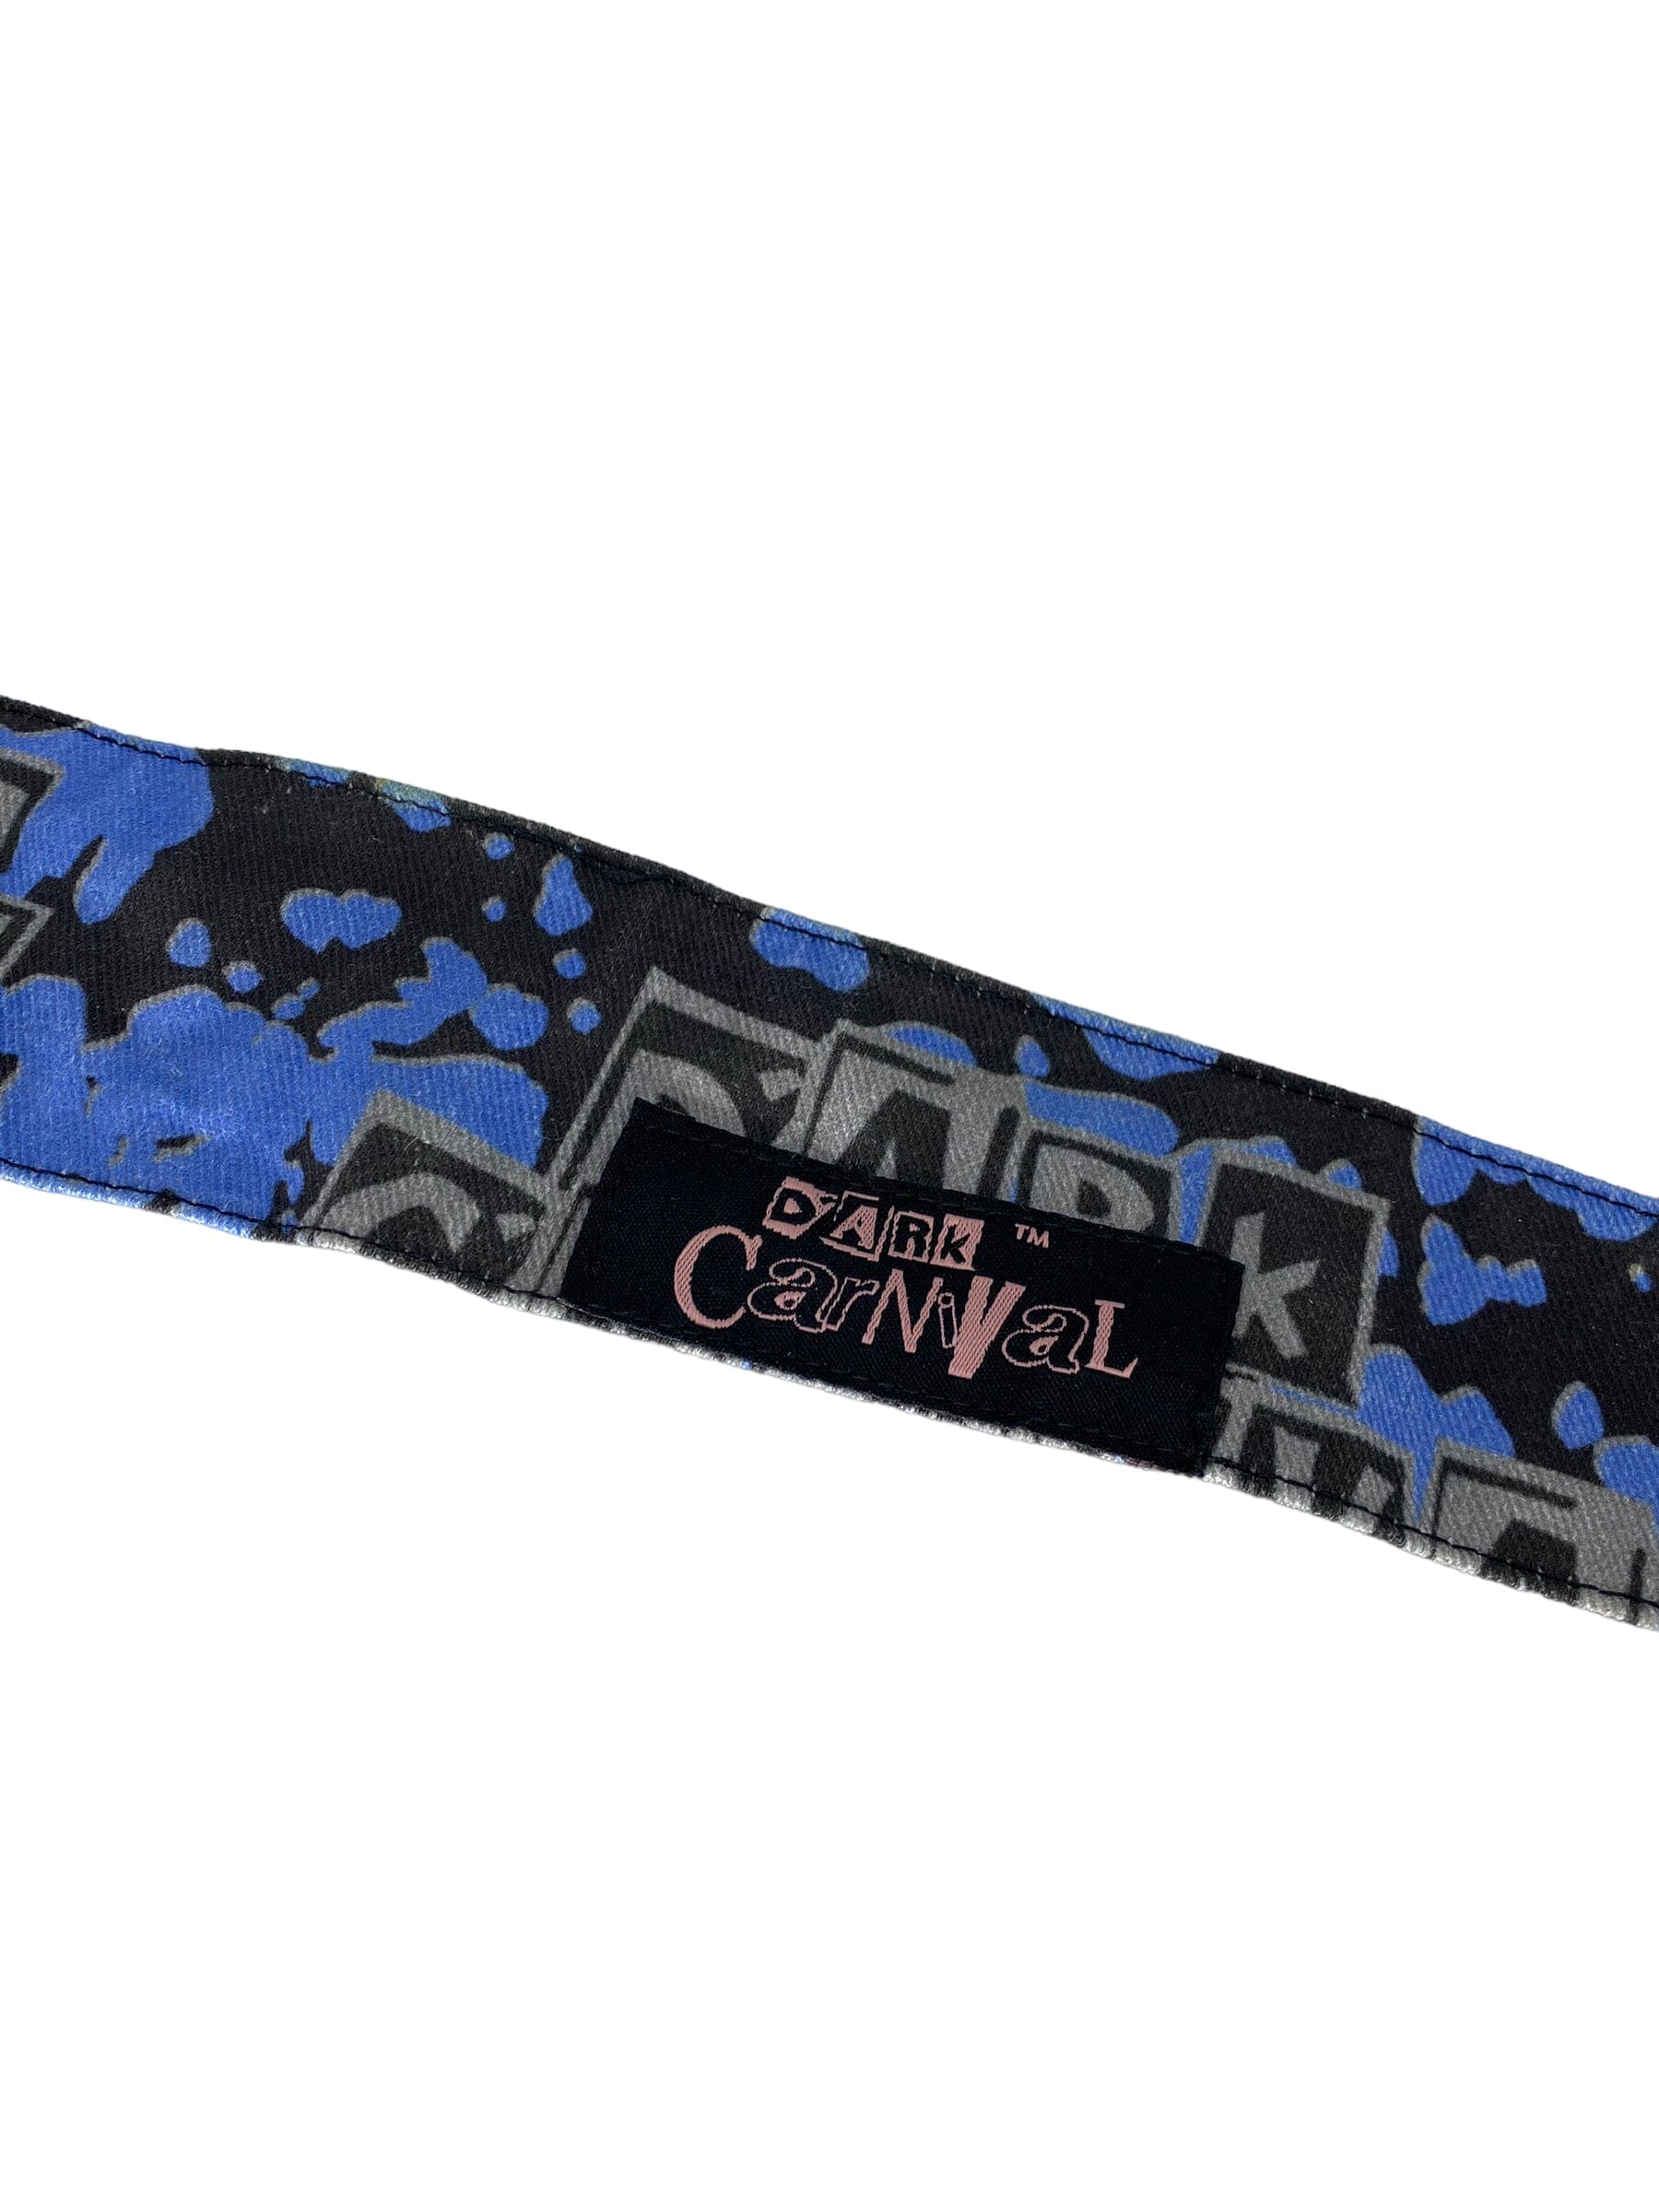 Used Dark Carnival Headband Paintball Gun from CPXBrosPaintball Buy/Sell/Trade Paintball Markers, Paintball Hoppers, Paintball Masks, and Hormesis Headbands